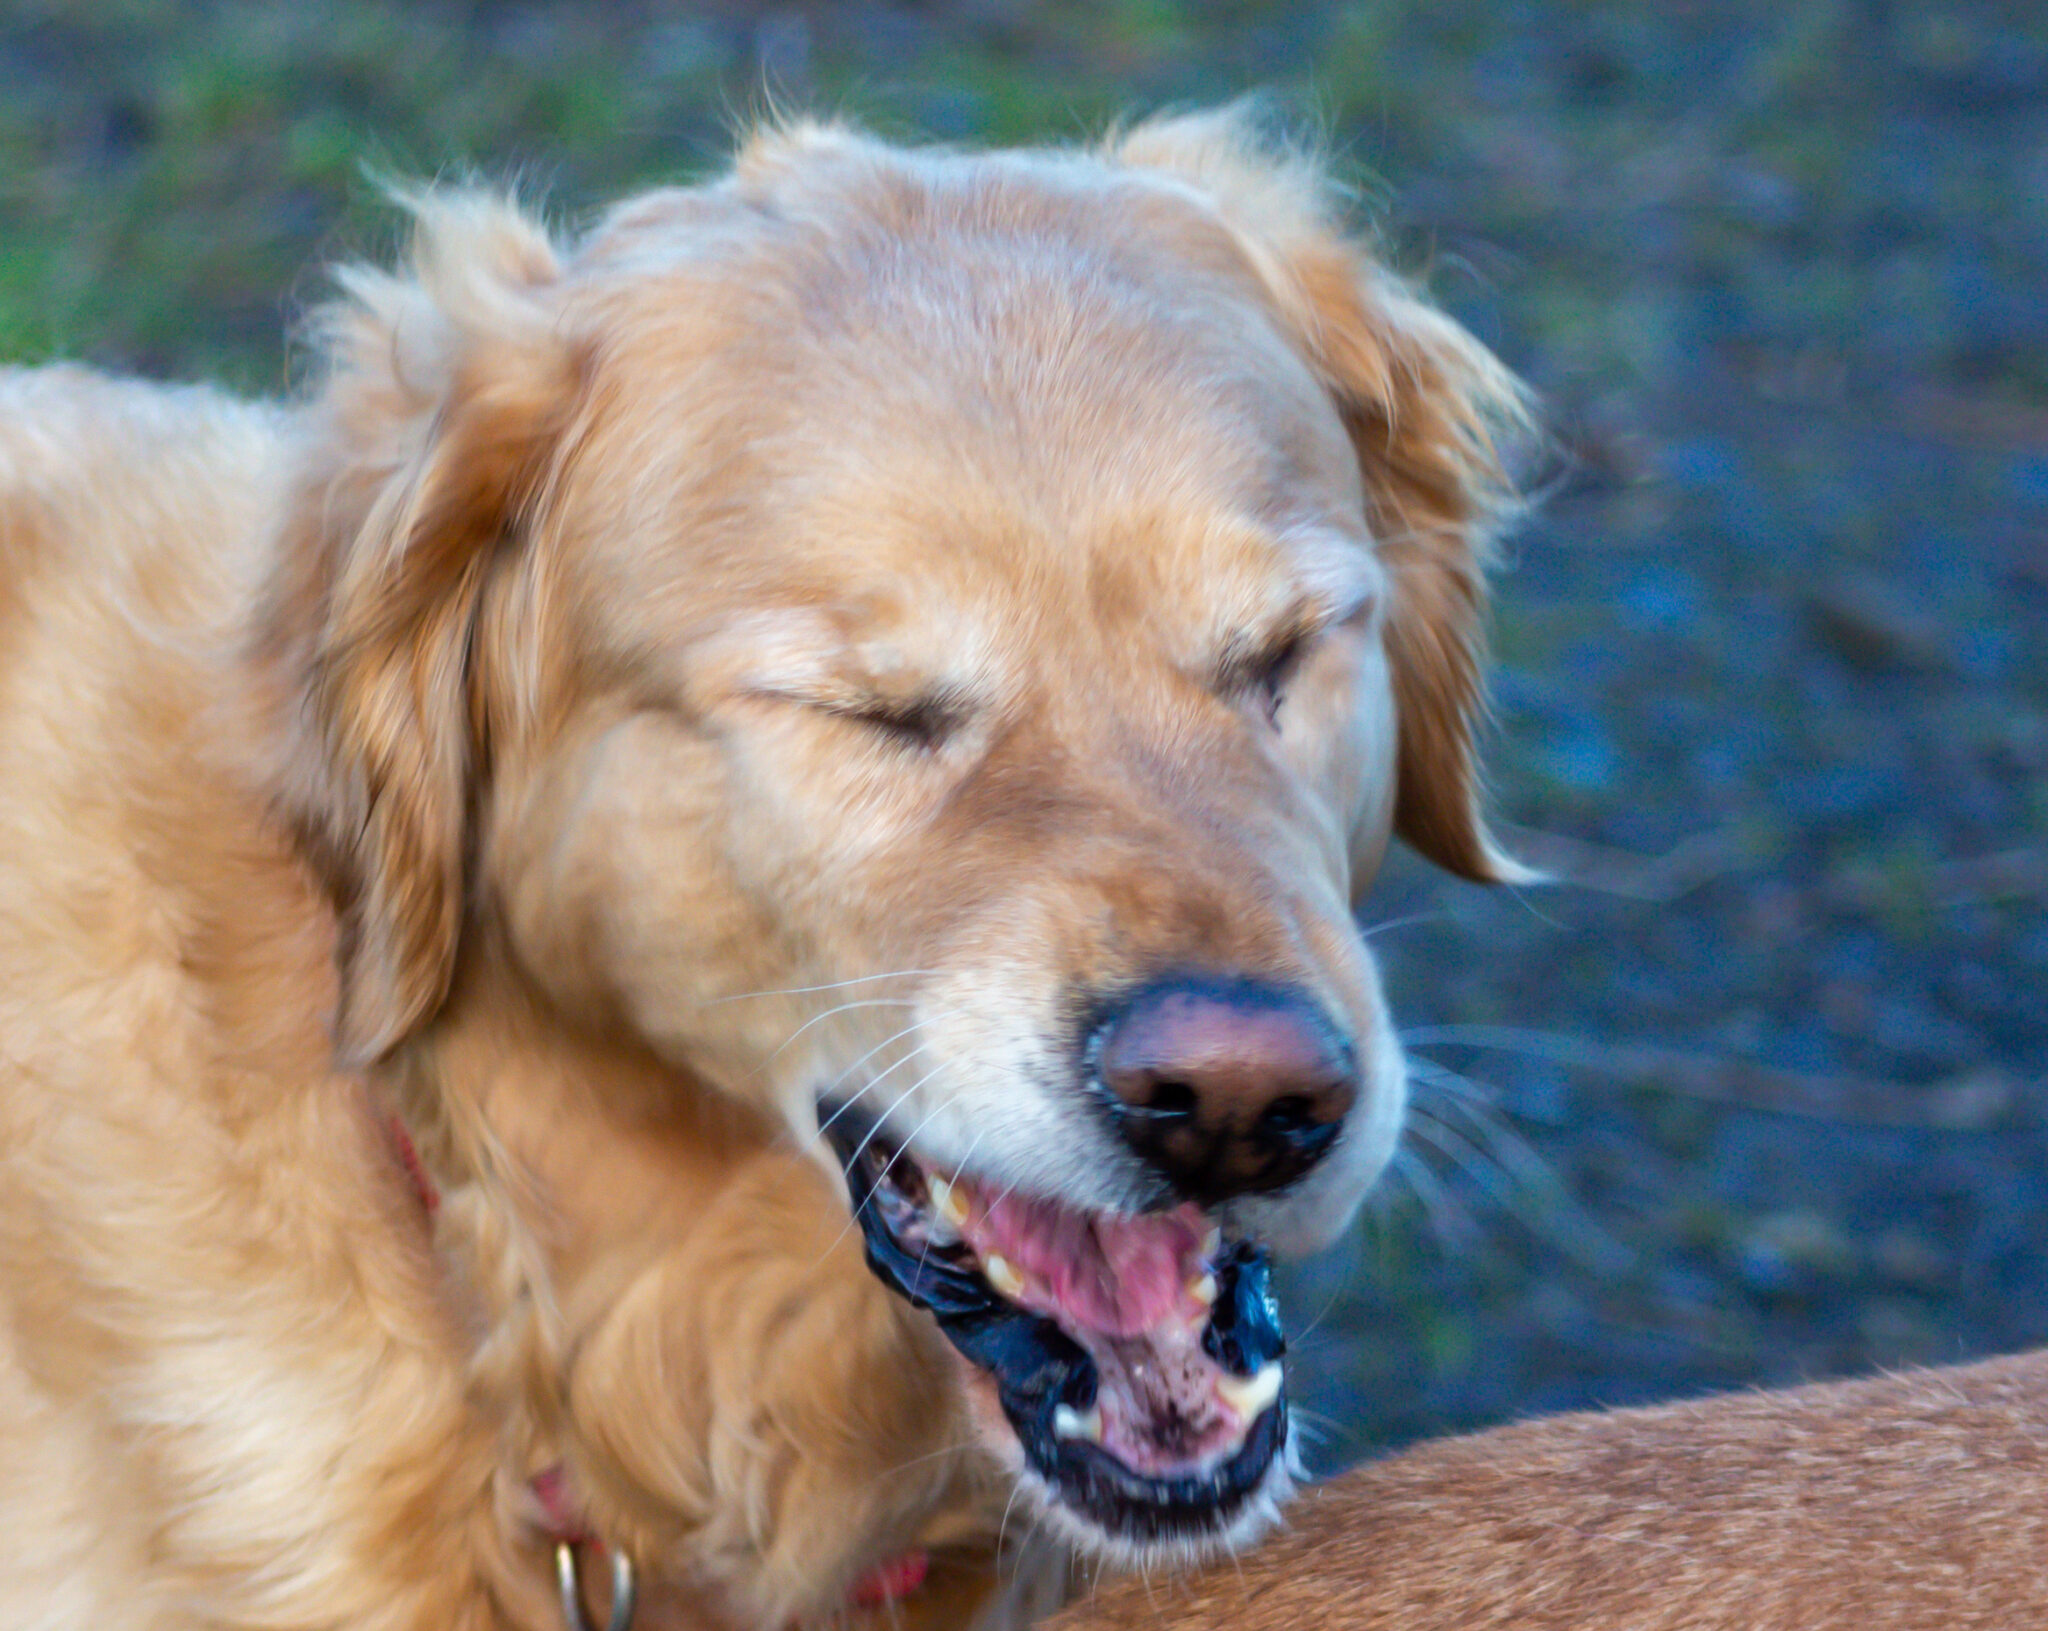 dog with canine respiratory virus